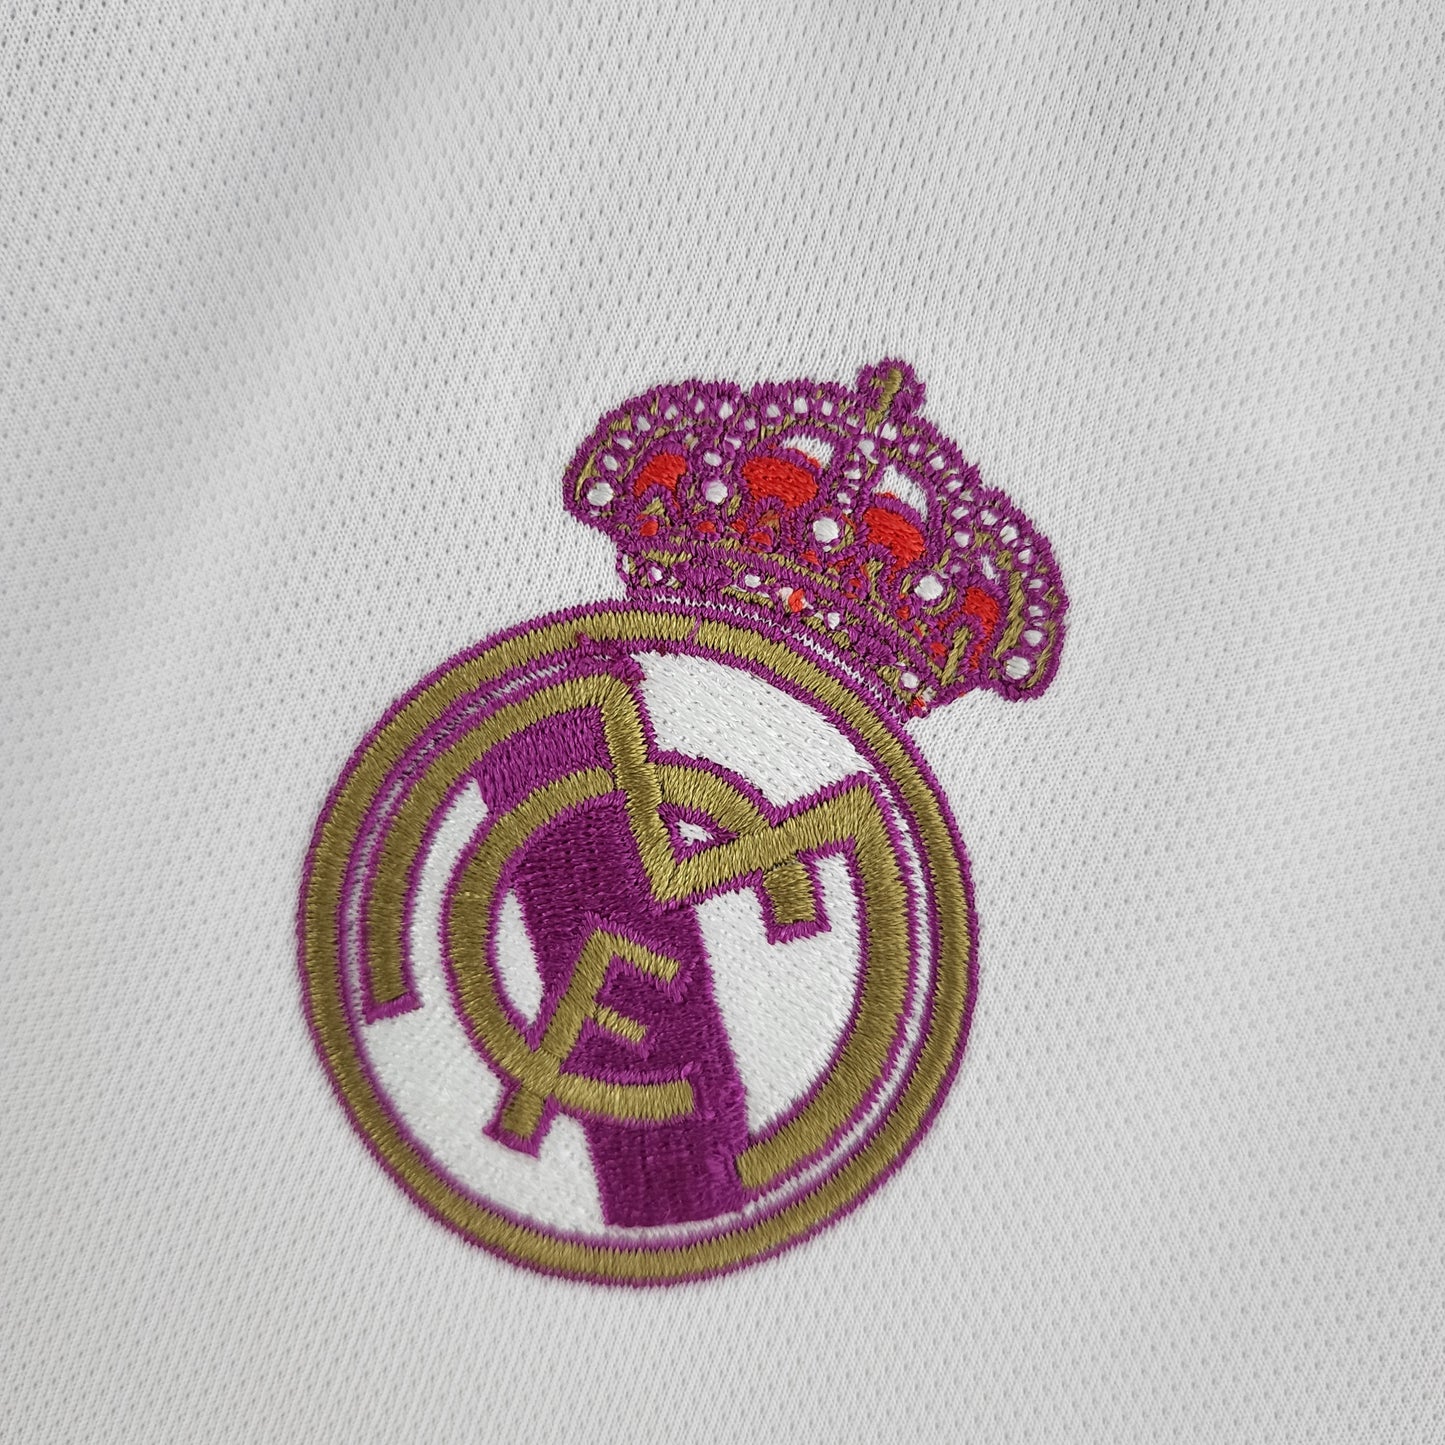 Real Madrid ExposureEdition RETRO 2021/22